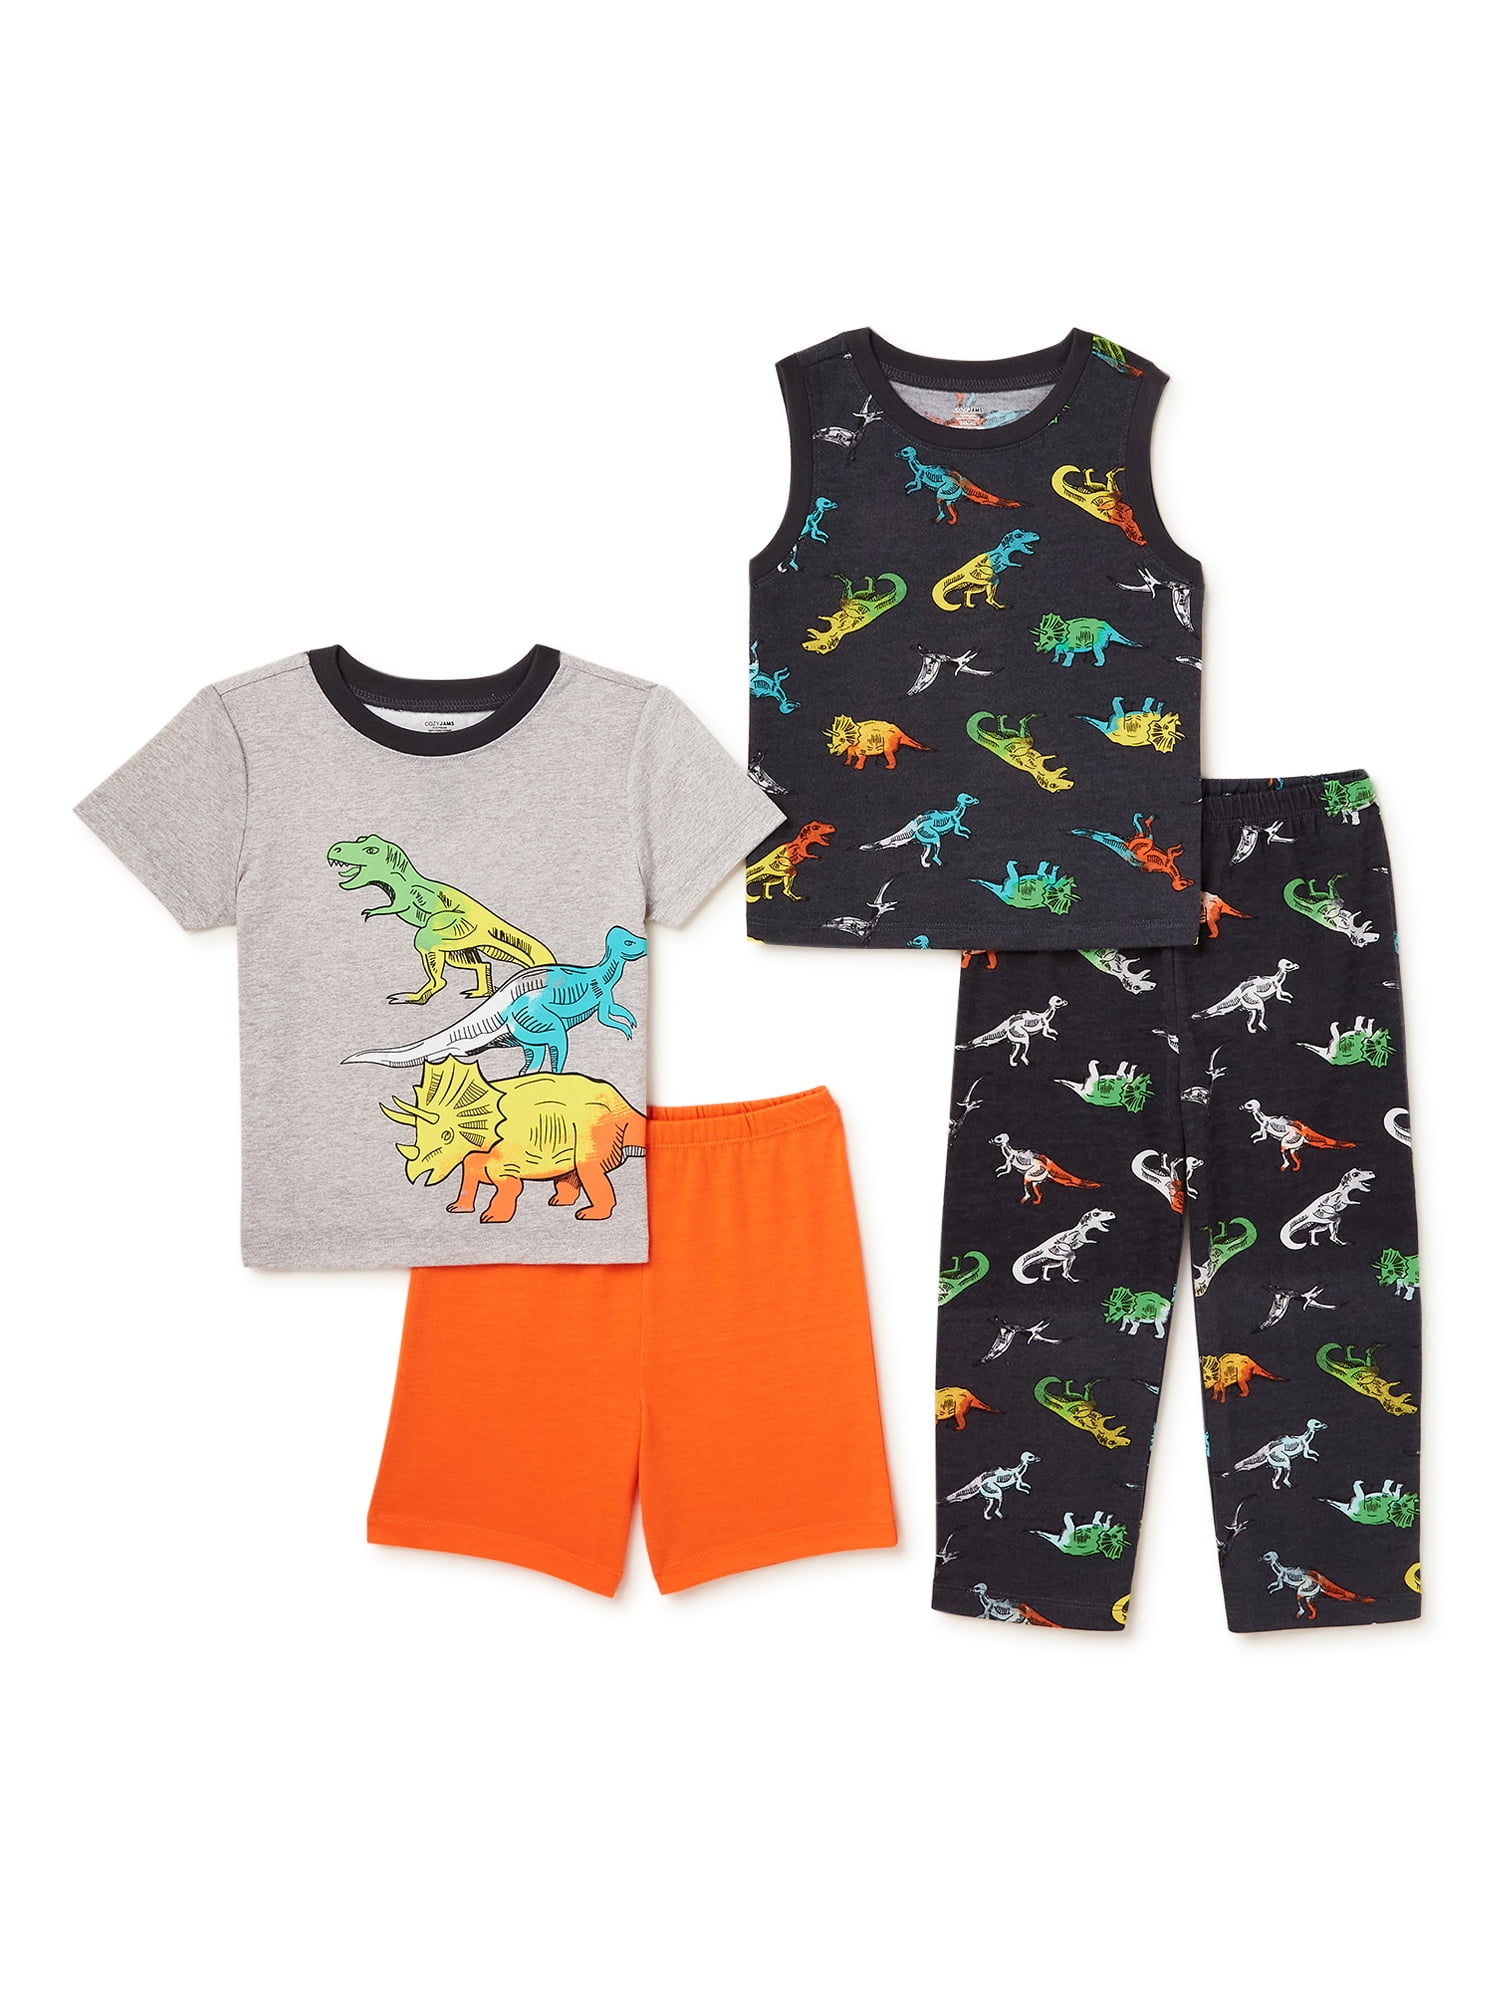 TMNT Toddler Boys Printed 2pc Pajama Pant Set Size 2T 3T 4T $34 